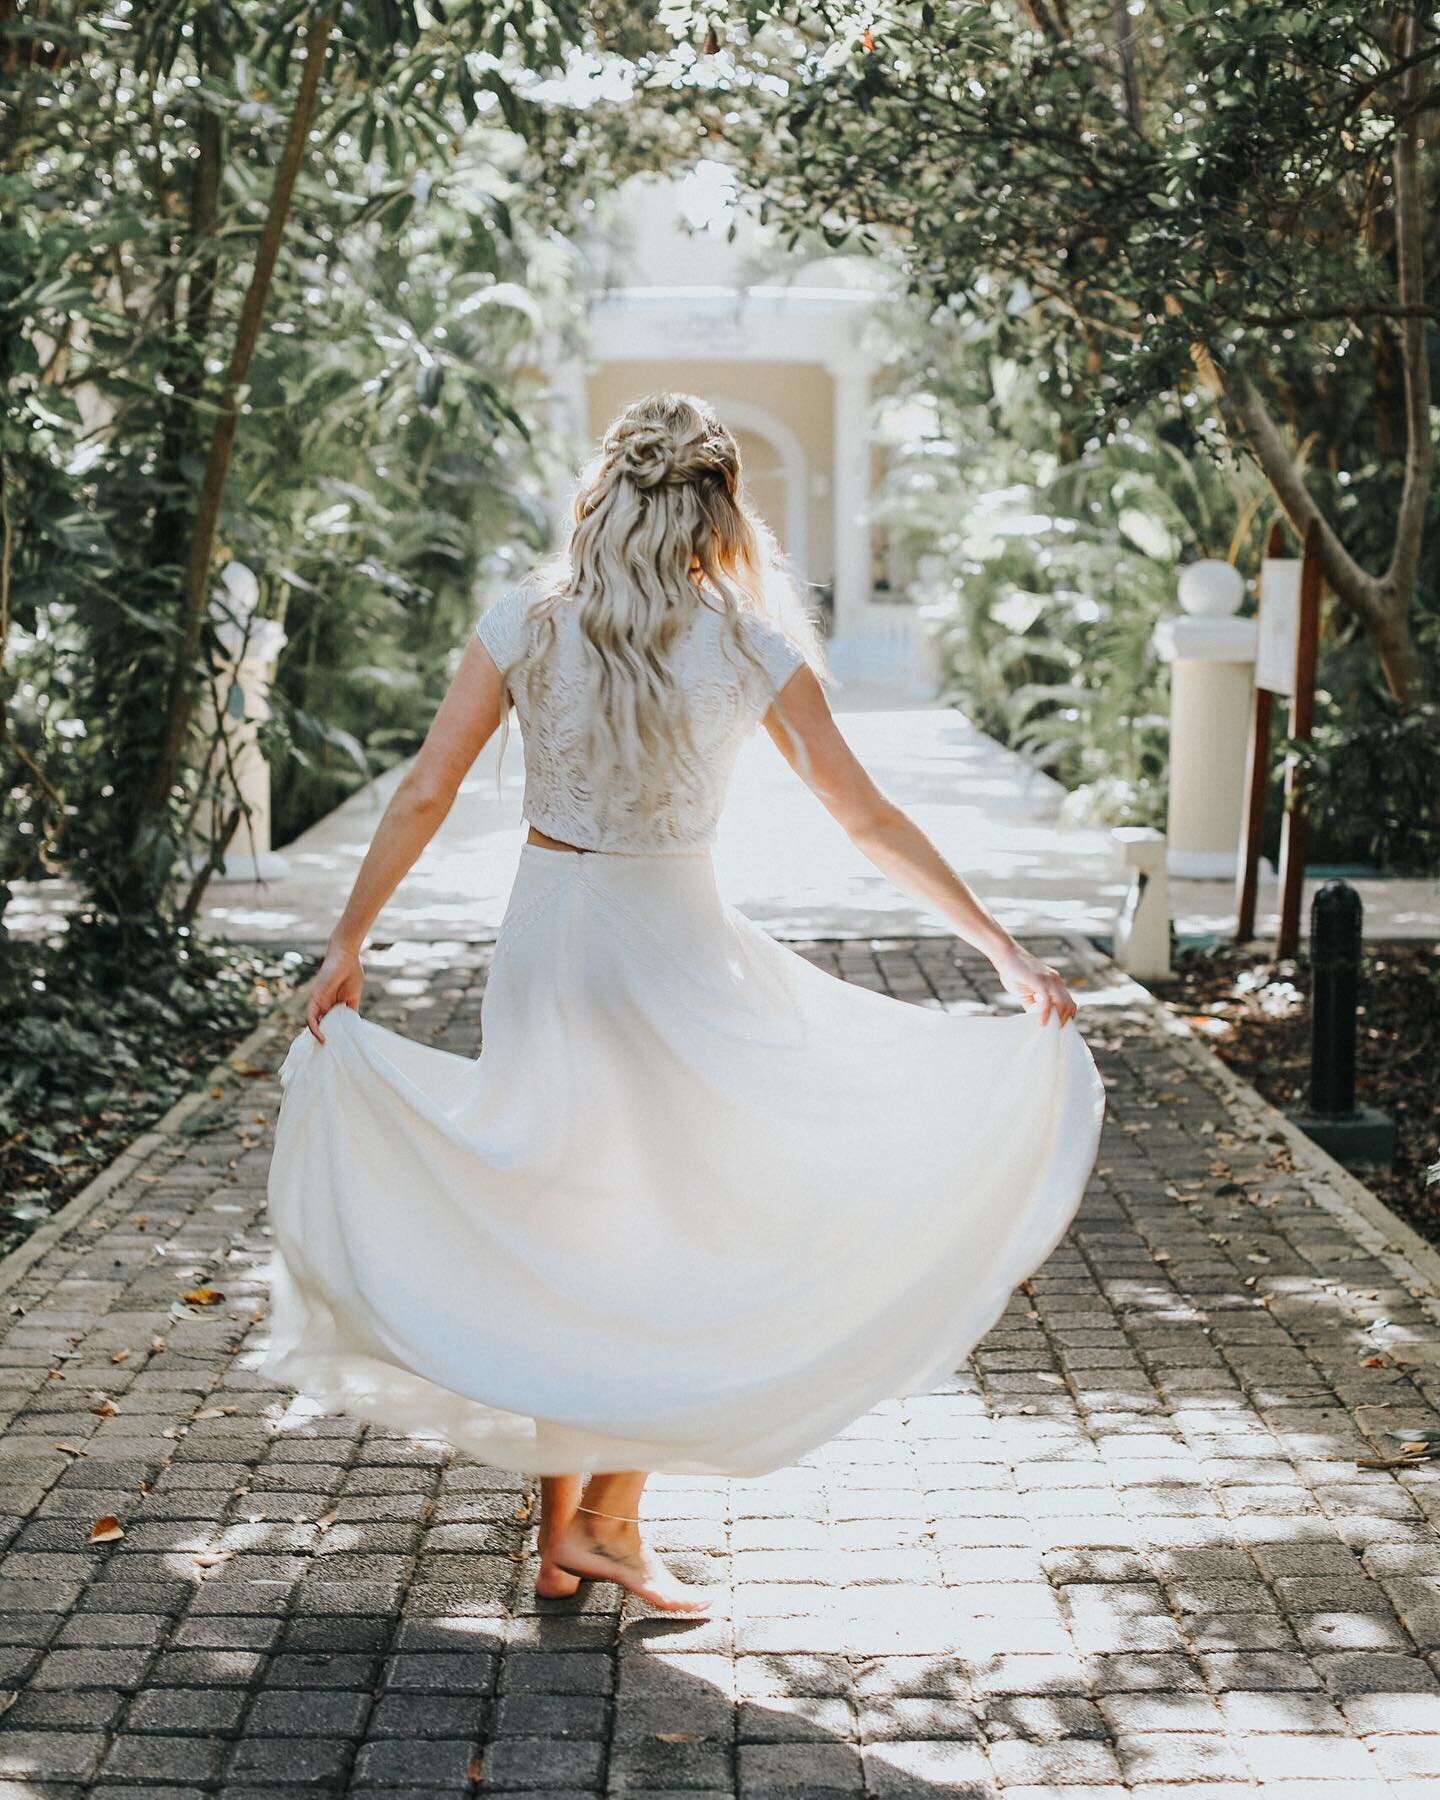 This dress sure does twirl well 💕

#tulummexico #bride #internationalweddingphotographer